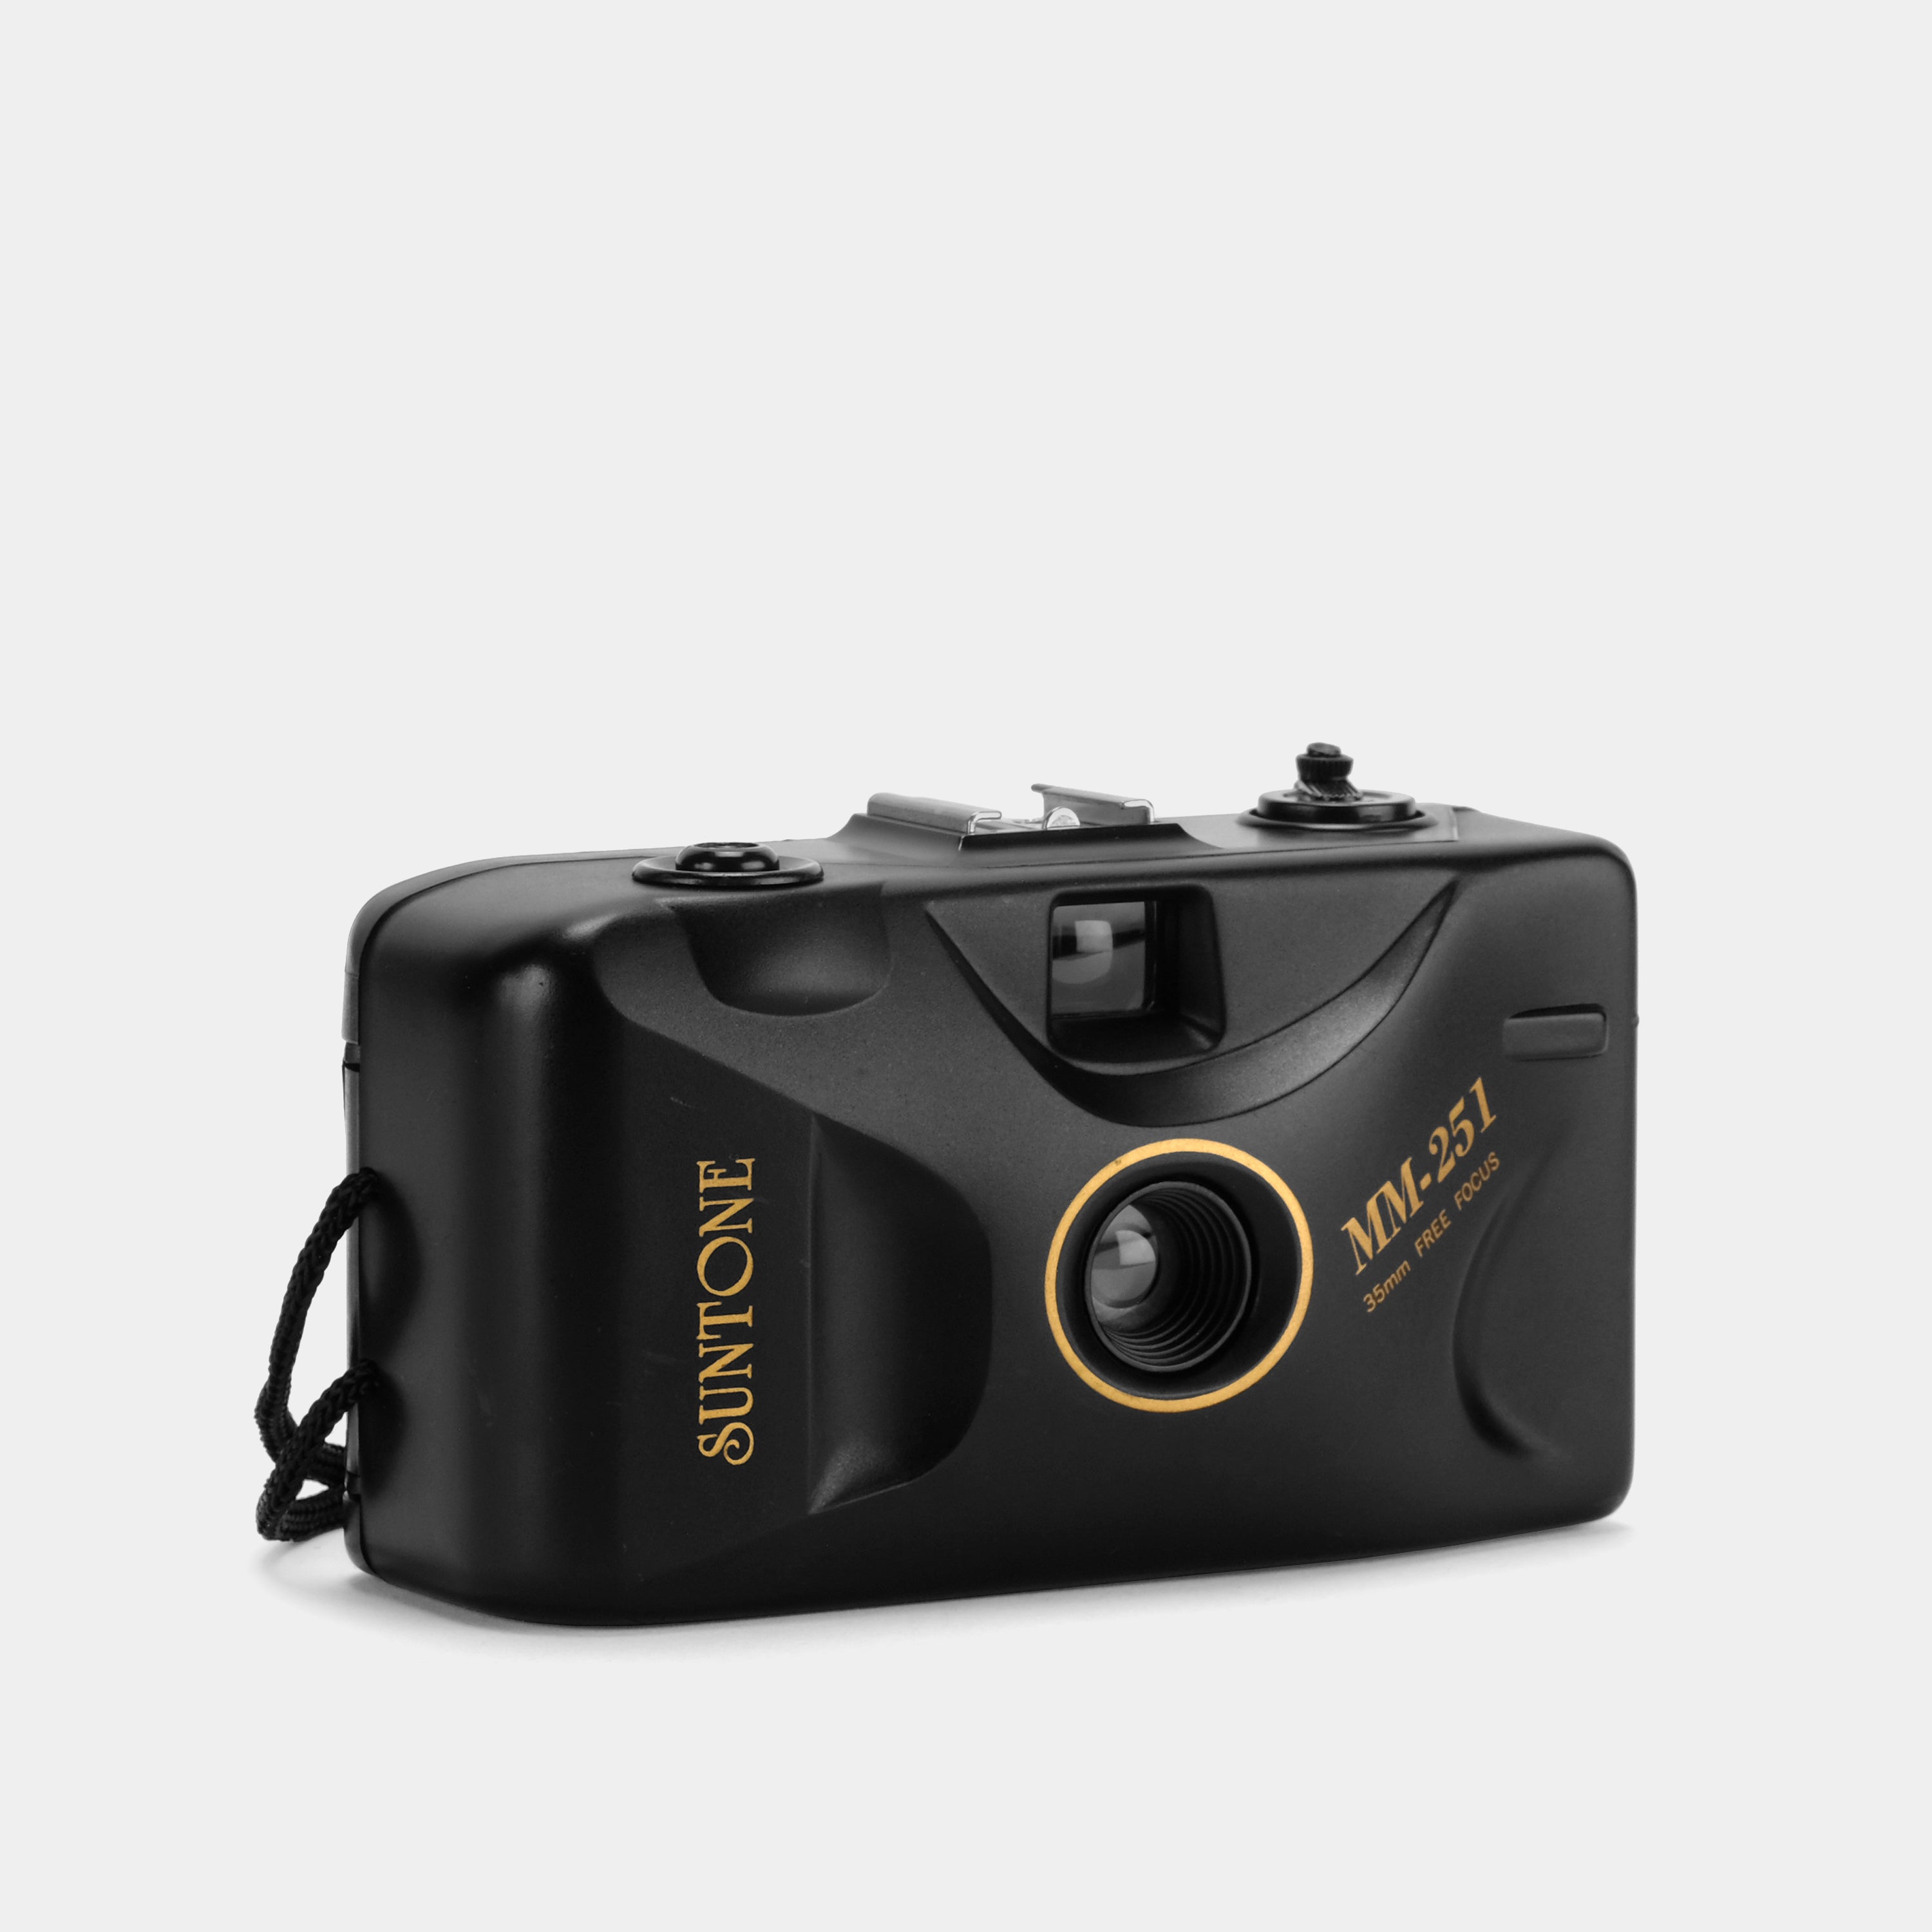 Suntone MM-251 35mm Point and Shoot Film Camera